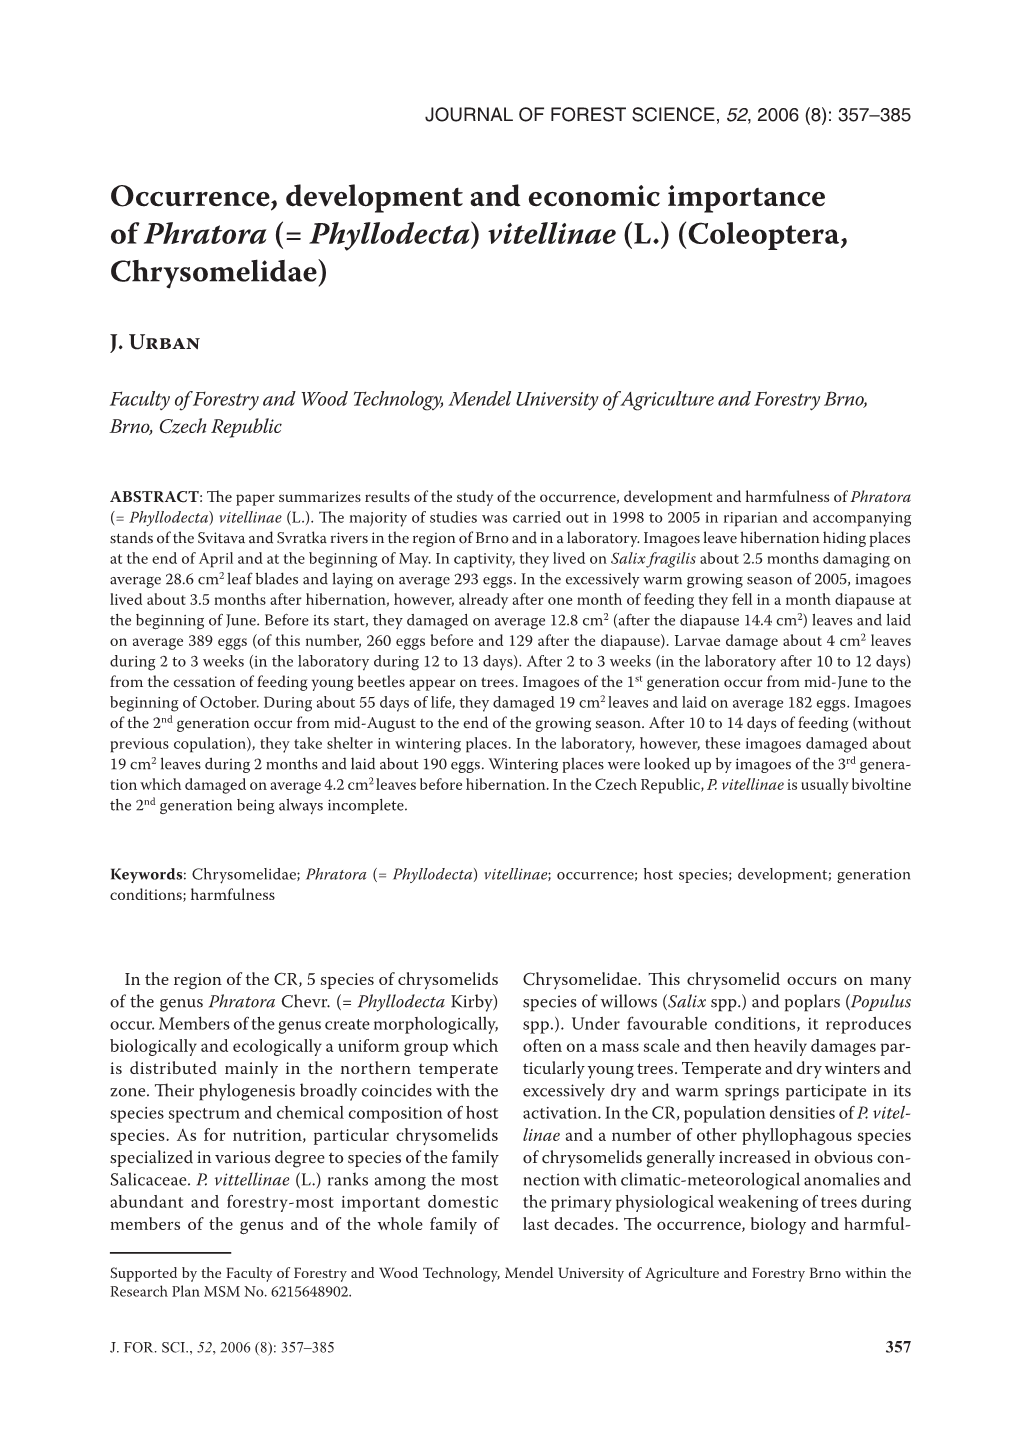 Occurrence, Development and Economic Importance of Phratora (= Phyllodecta) Vitellinae (L.) (Coleoptera, Chrysomelidae)